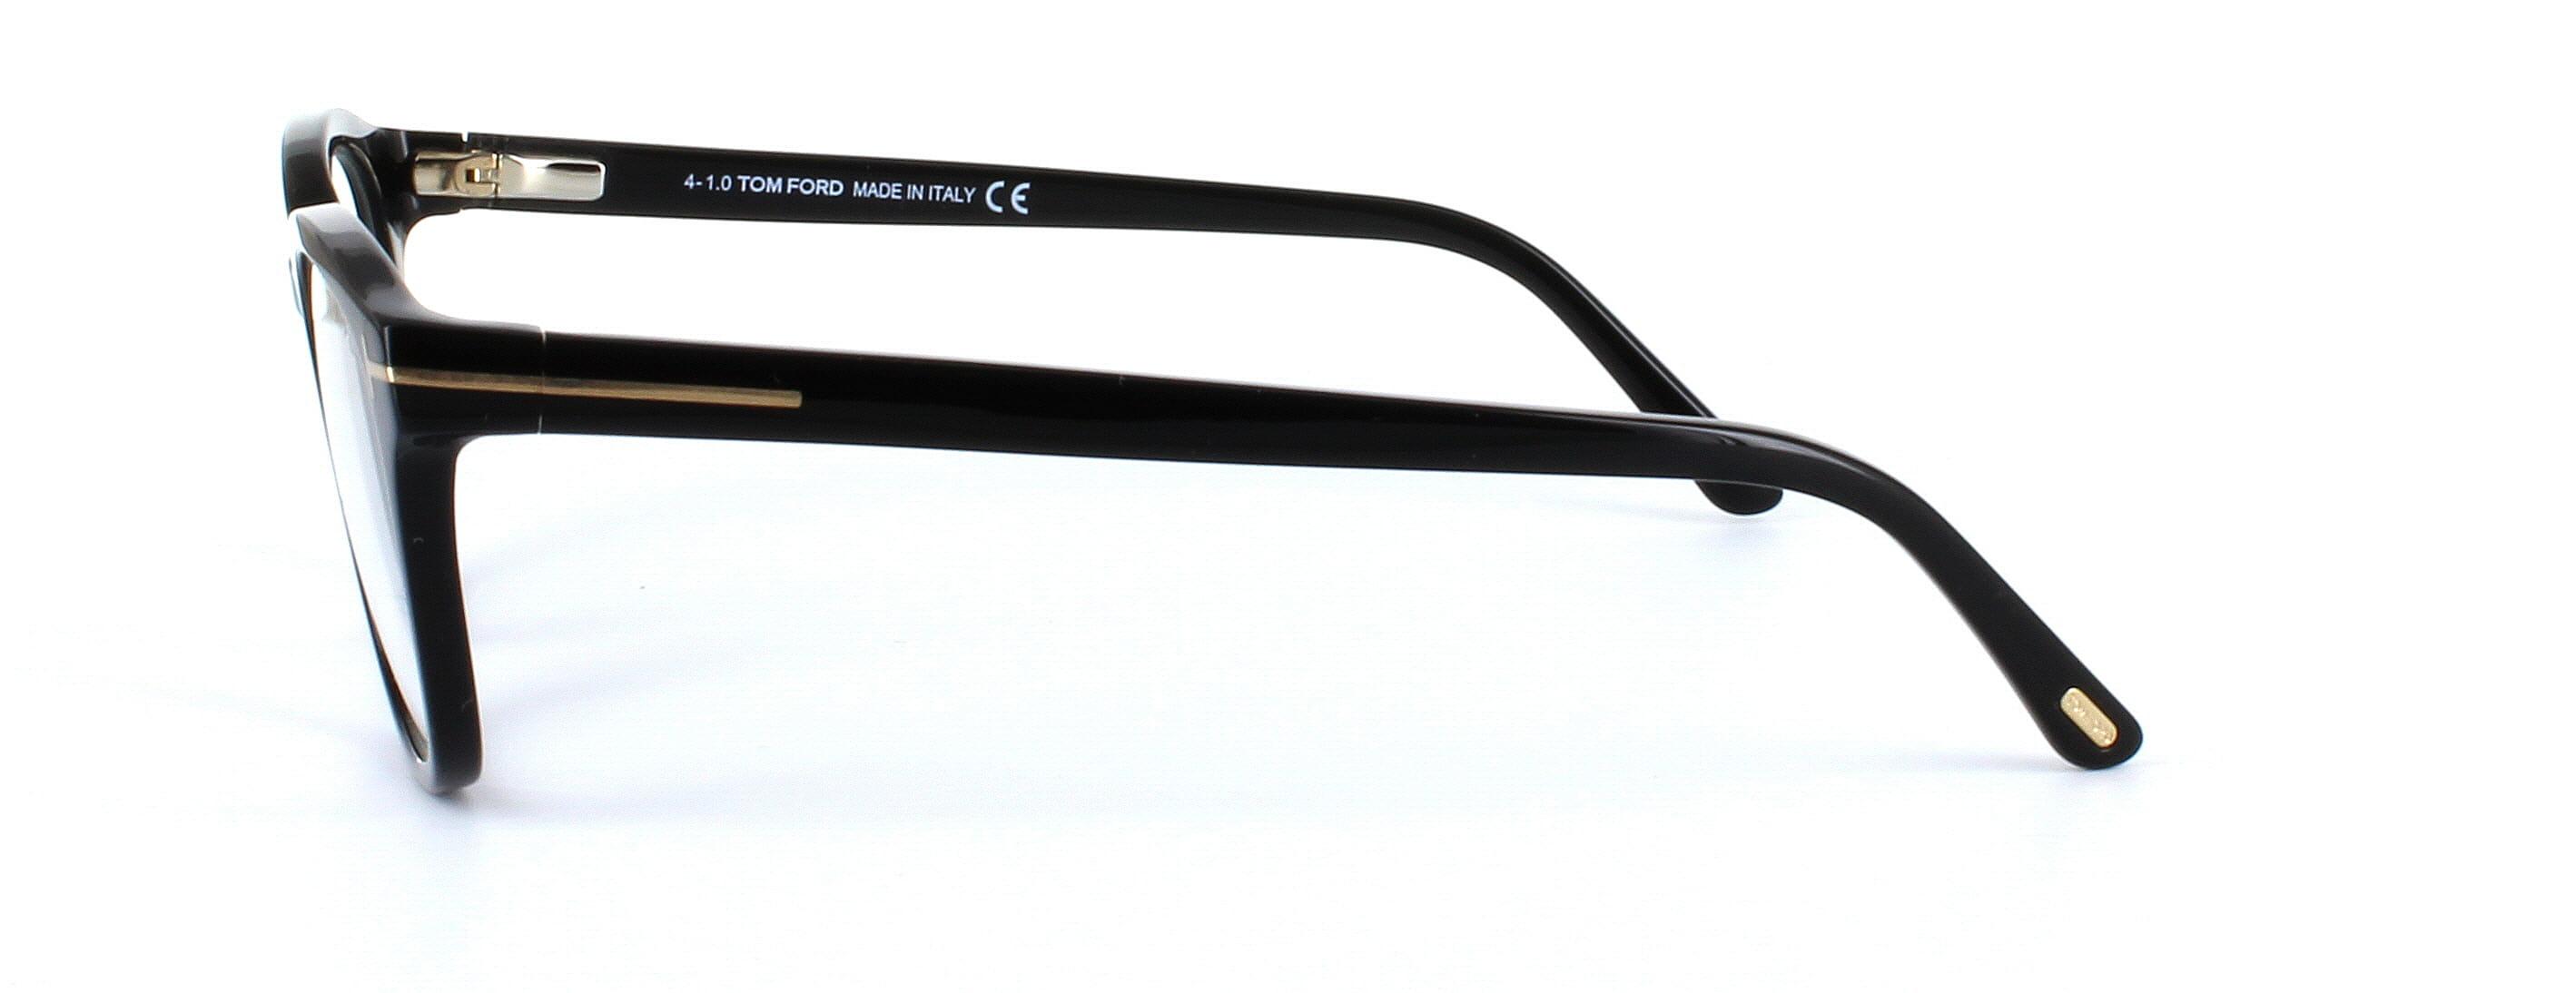 Tom Ford glasses model 5532 - Product image 2